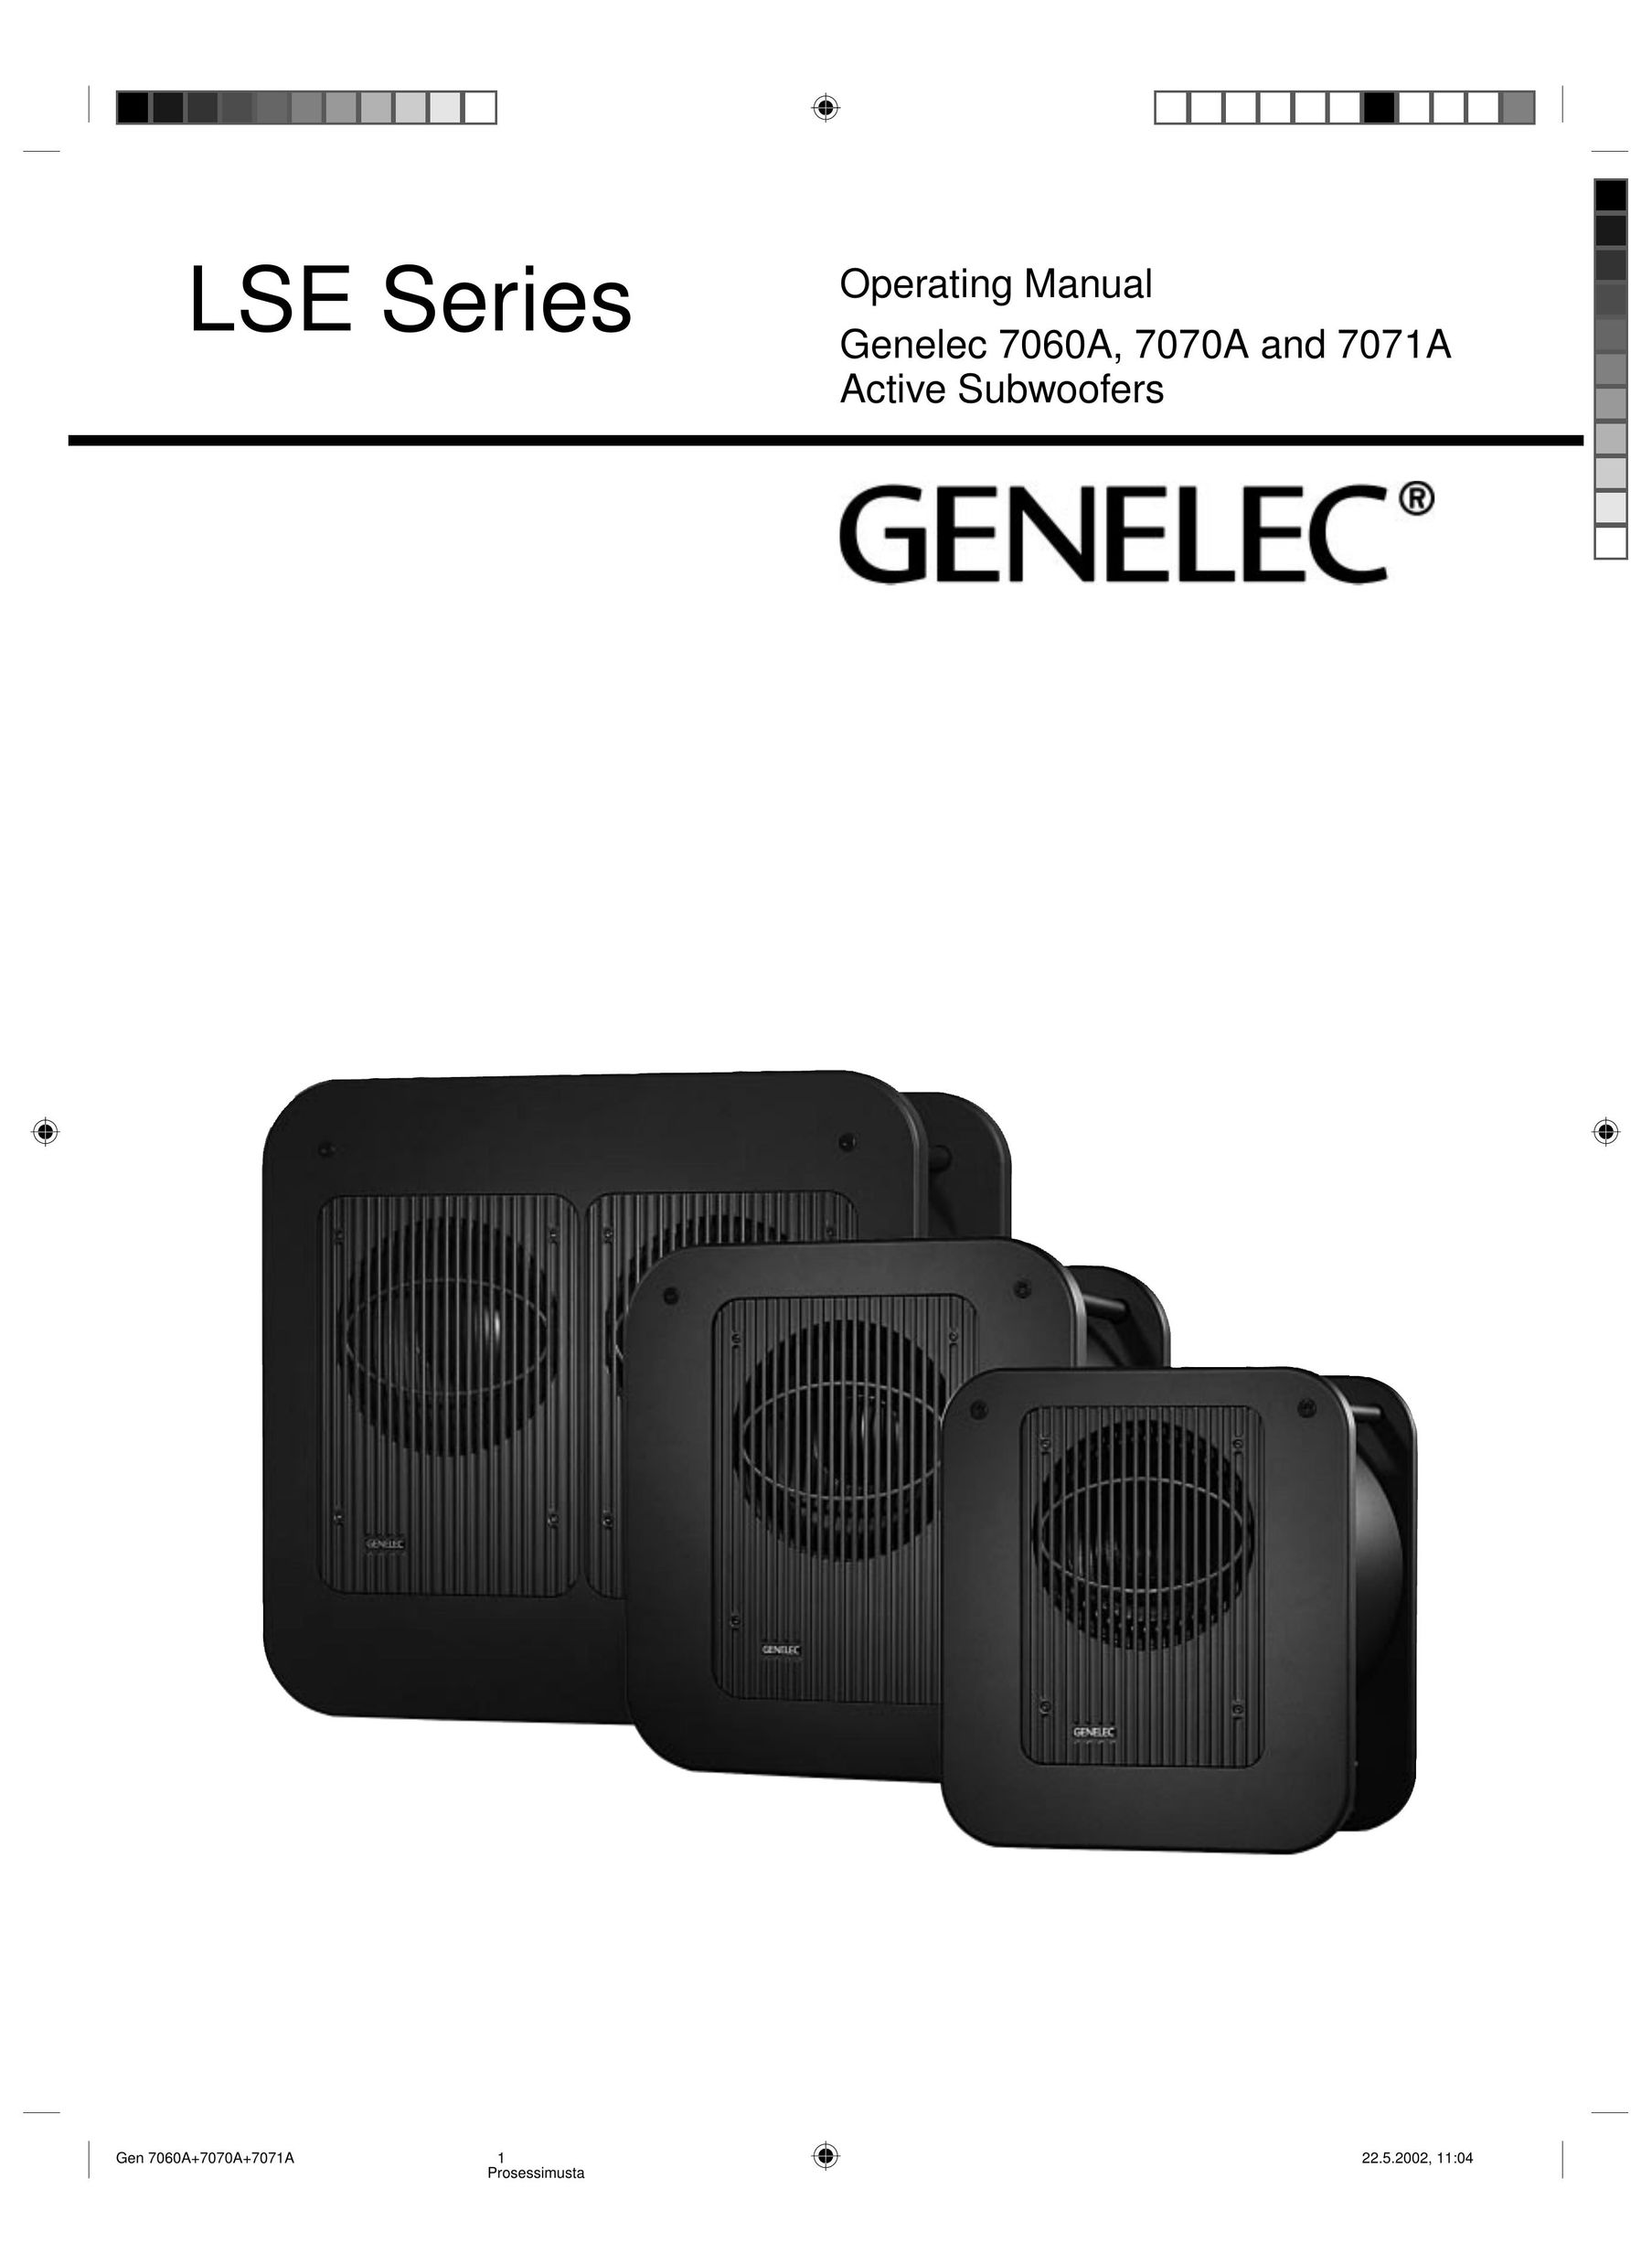 Genelec 7060A Speaker User Manual